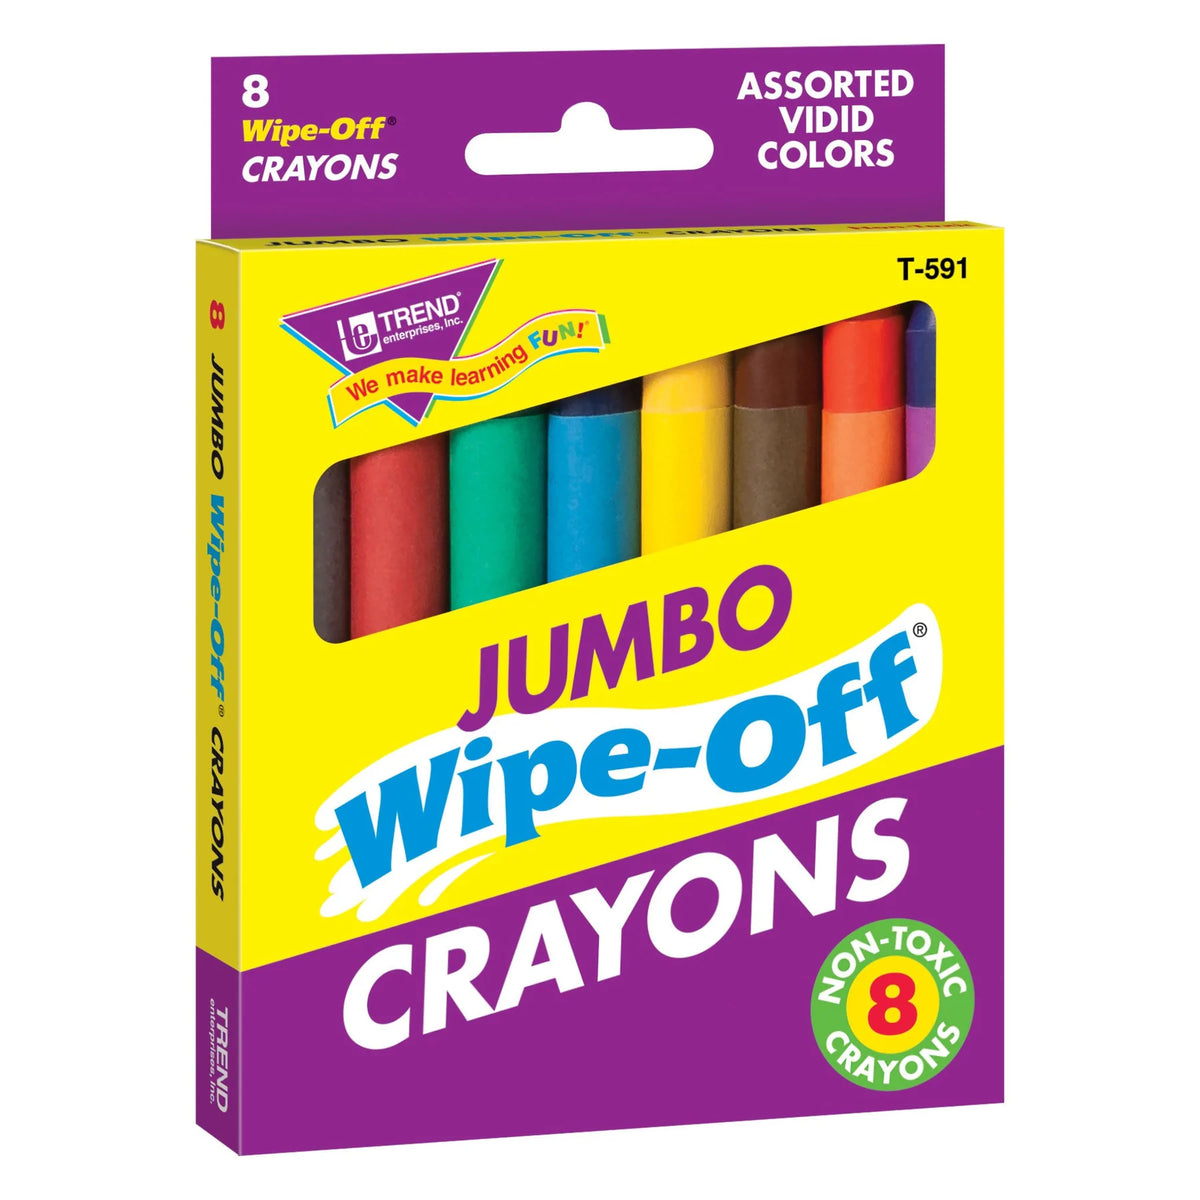 Jumbo Wipe-off Crayons Cover